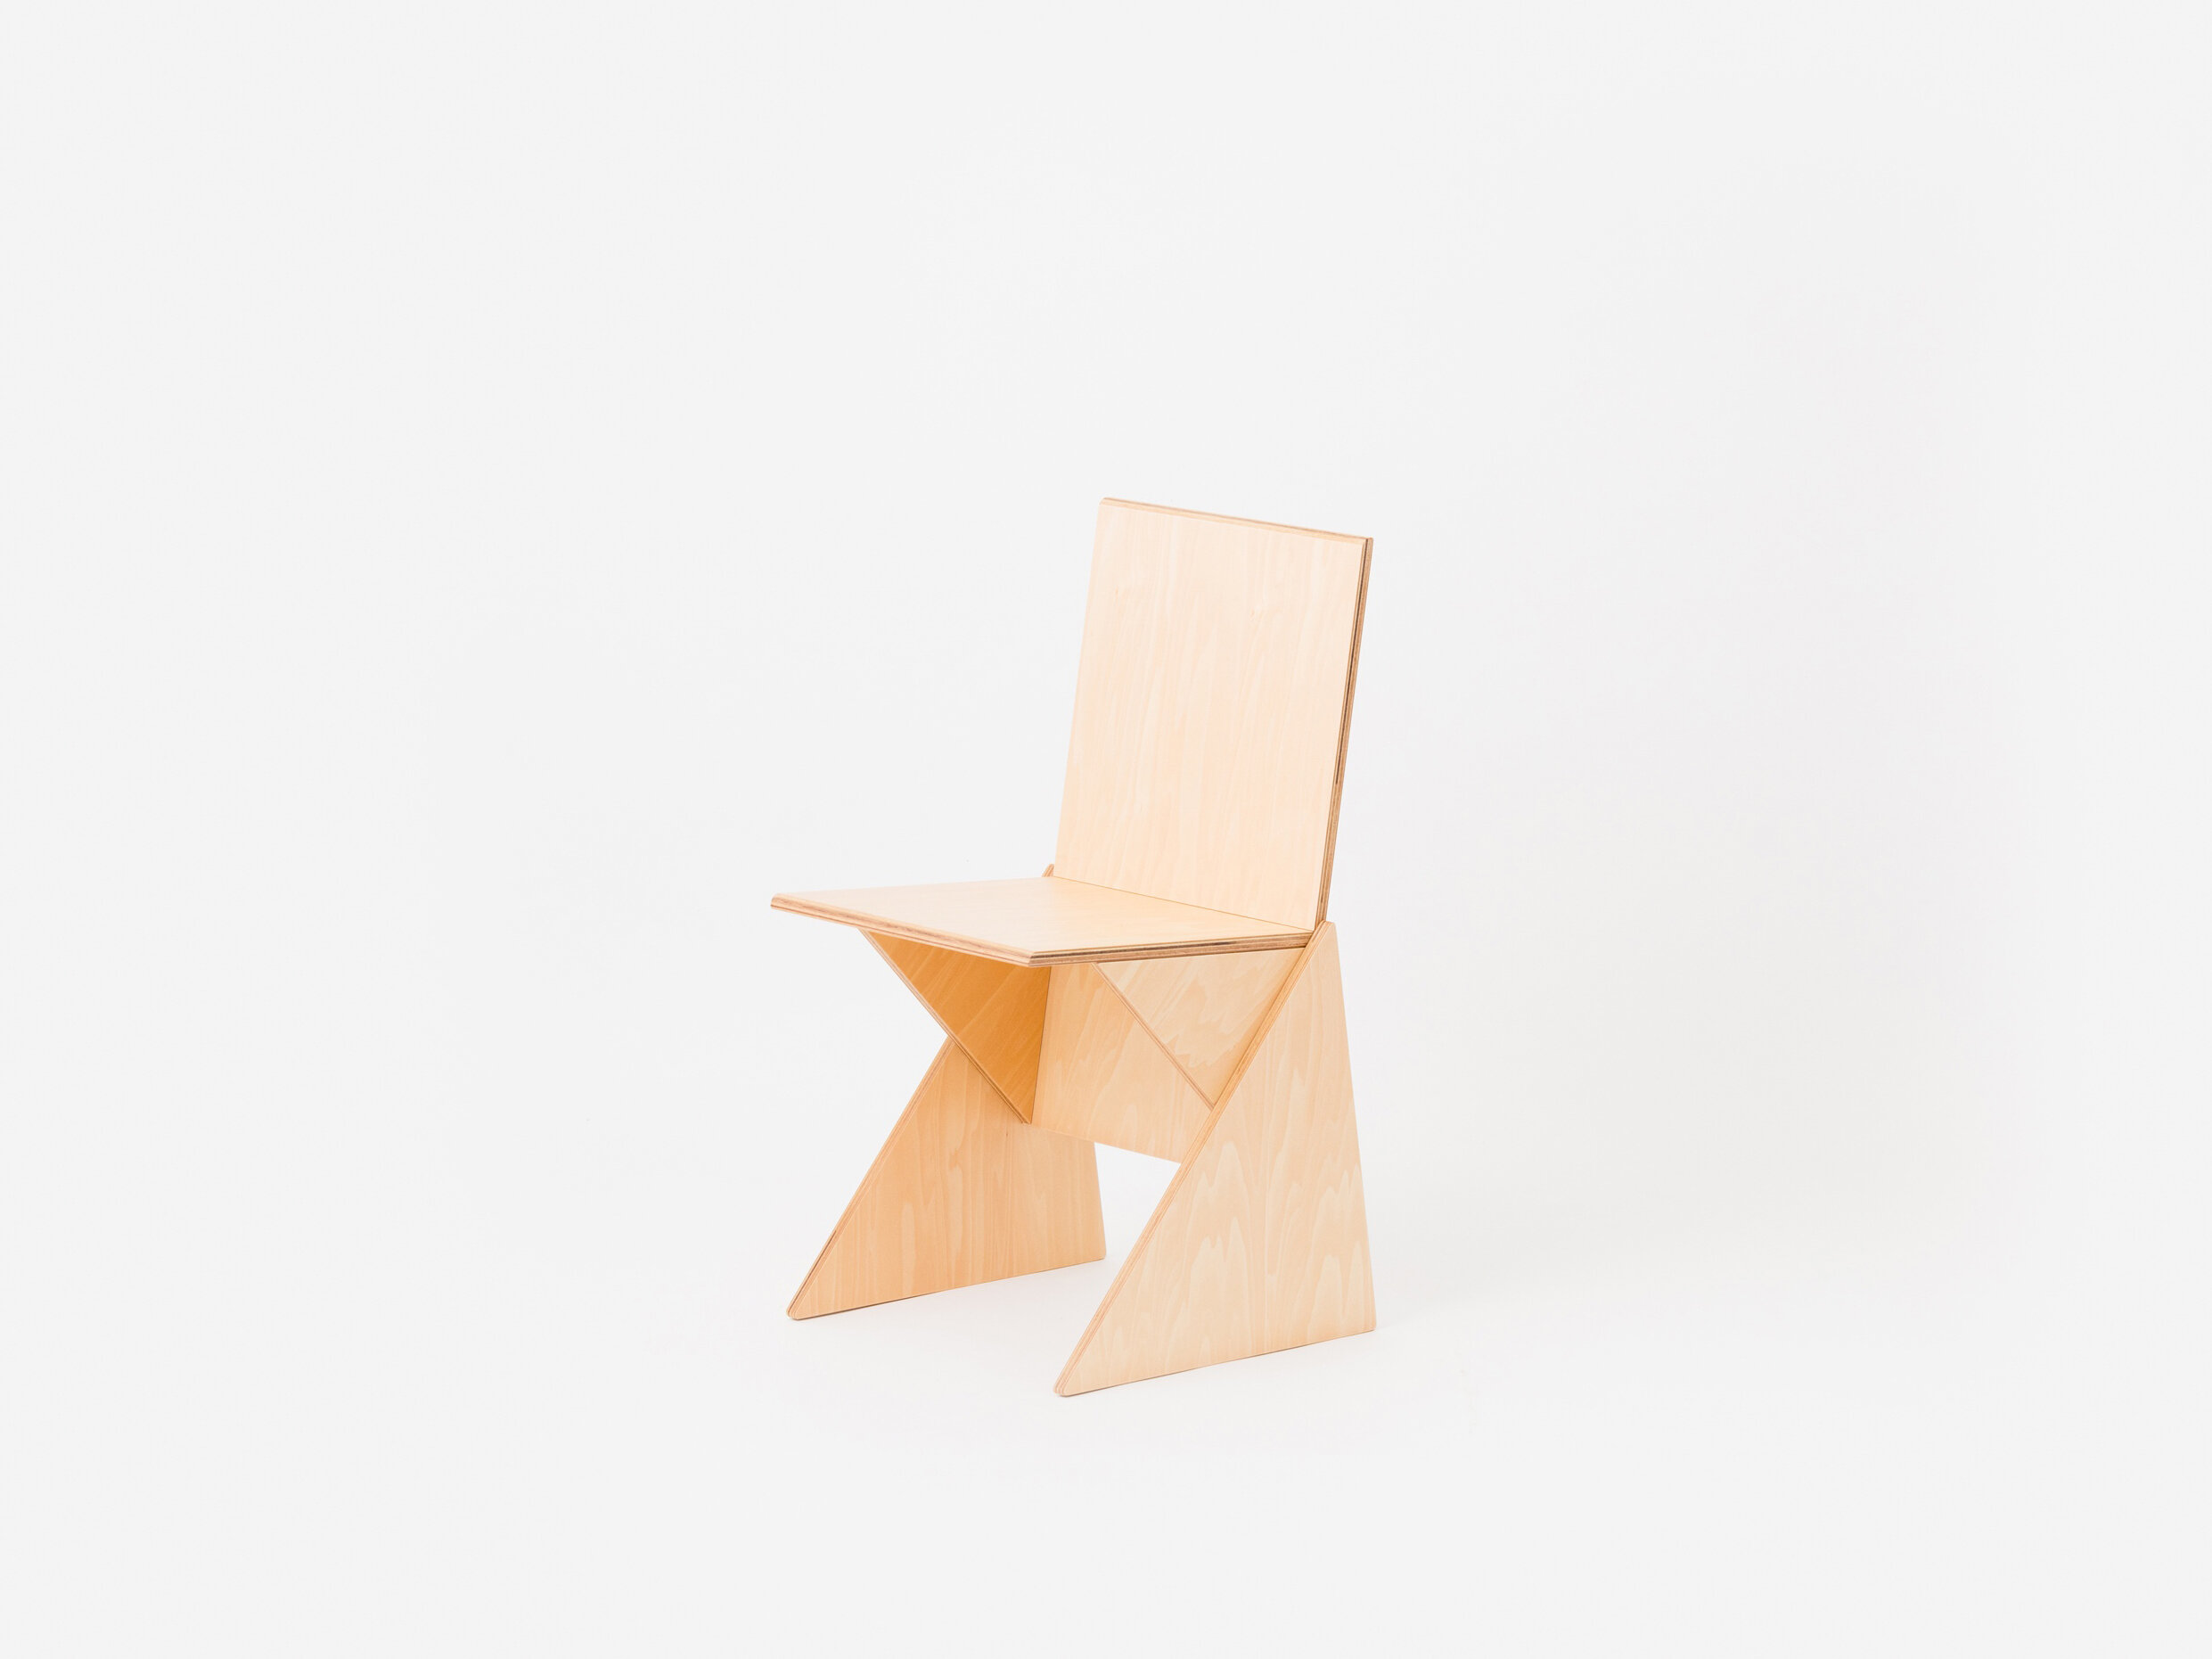 kodai-iwamoto-sankaku-chair-furniture-design-idreit-038.jpg